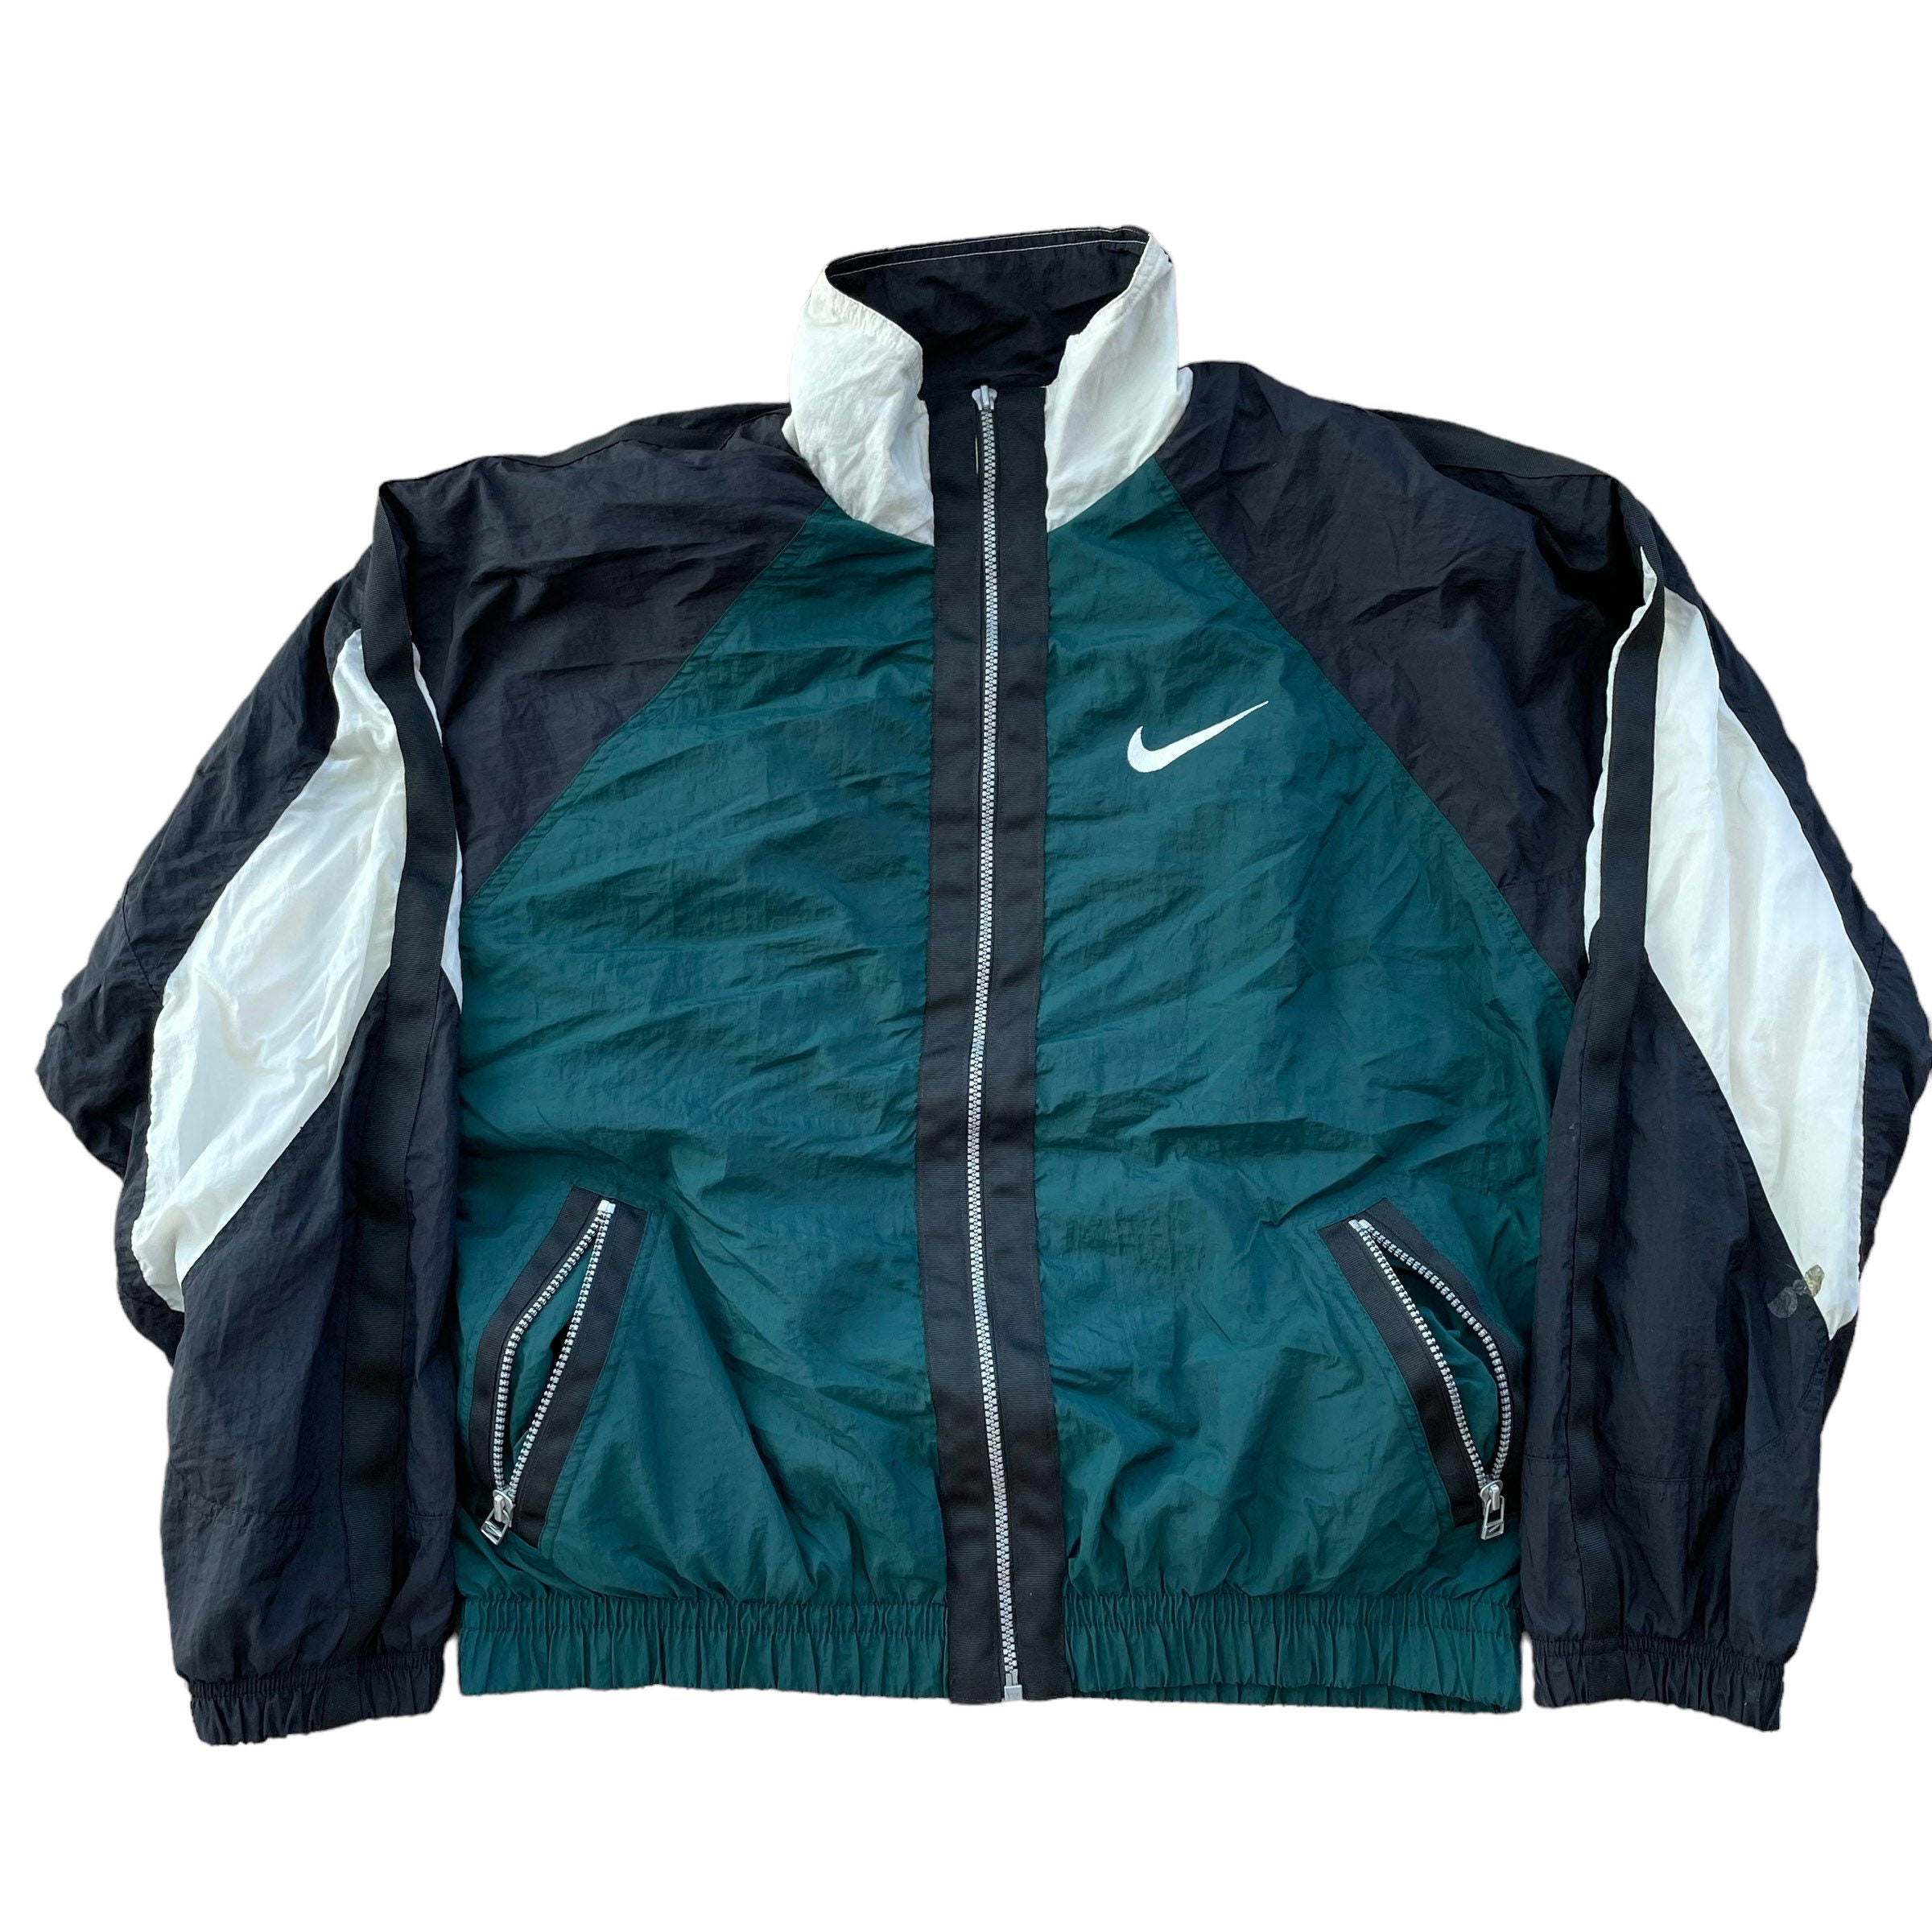 Vintage 90s Nike Windbreaker Jacket/ Pine Green/ White Tag Etsy